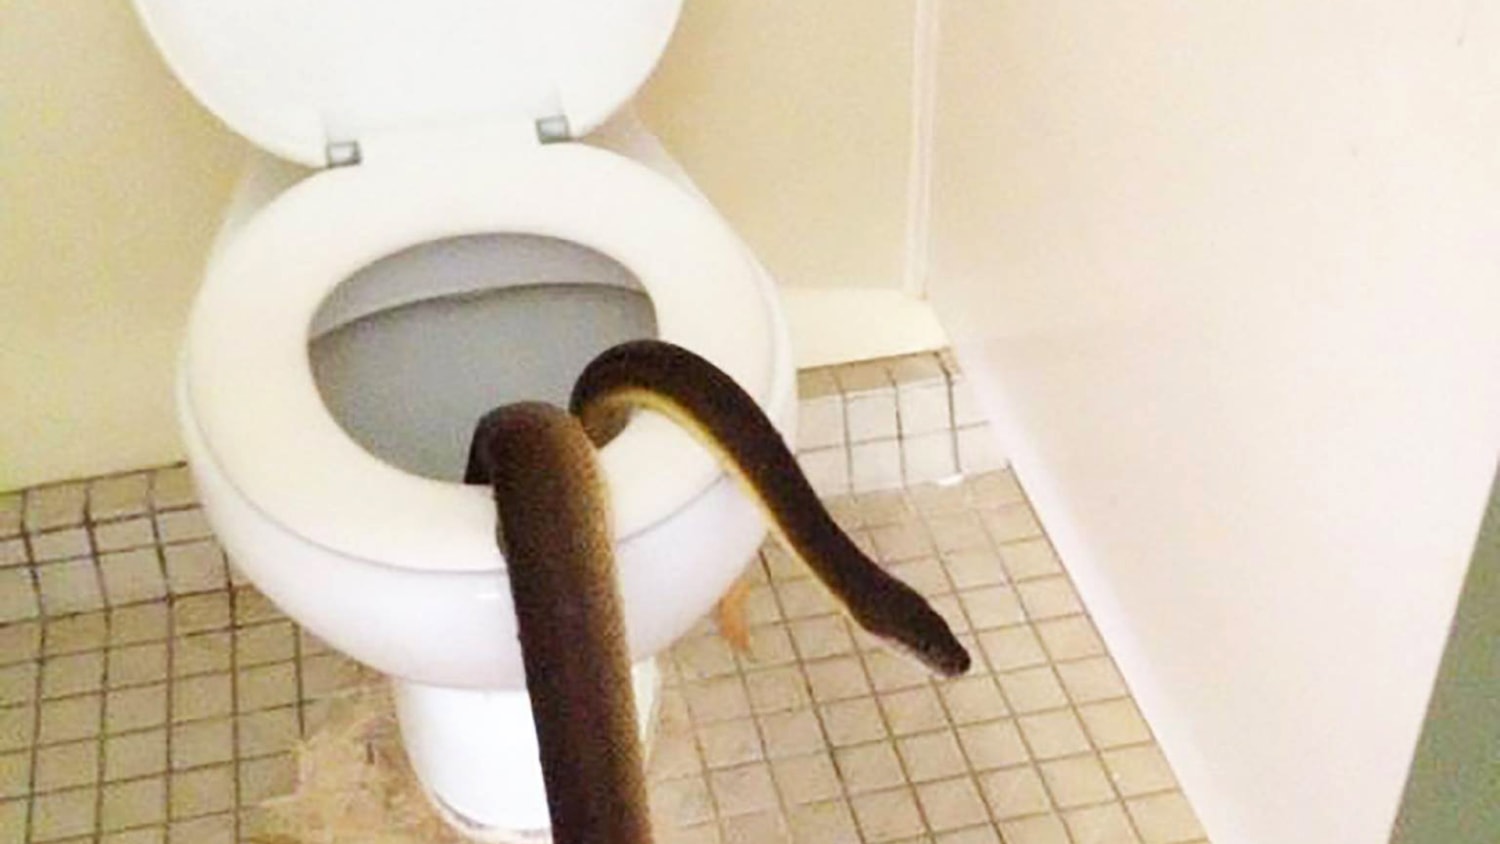 Venomous snake found lurking in Australian public toilet